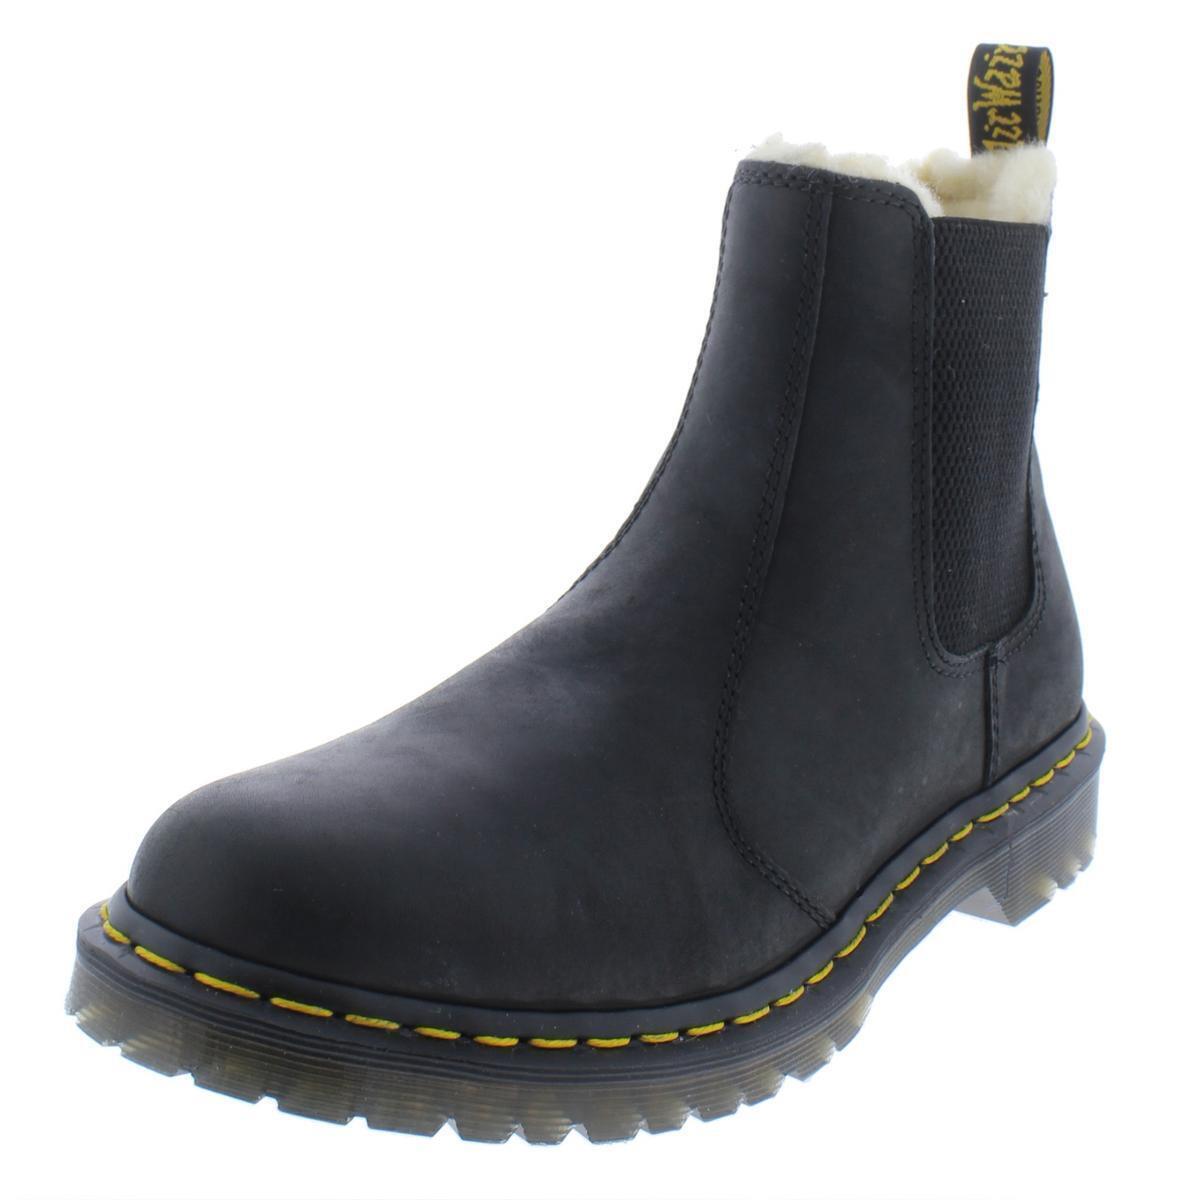 Dr. Martens Womens Leonore Black Chelsea Boots Shoes 8 Medium B M Bhfo 4616